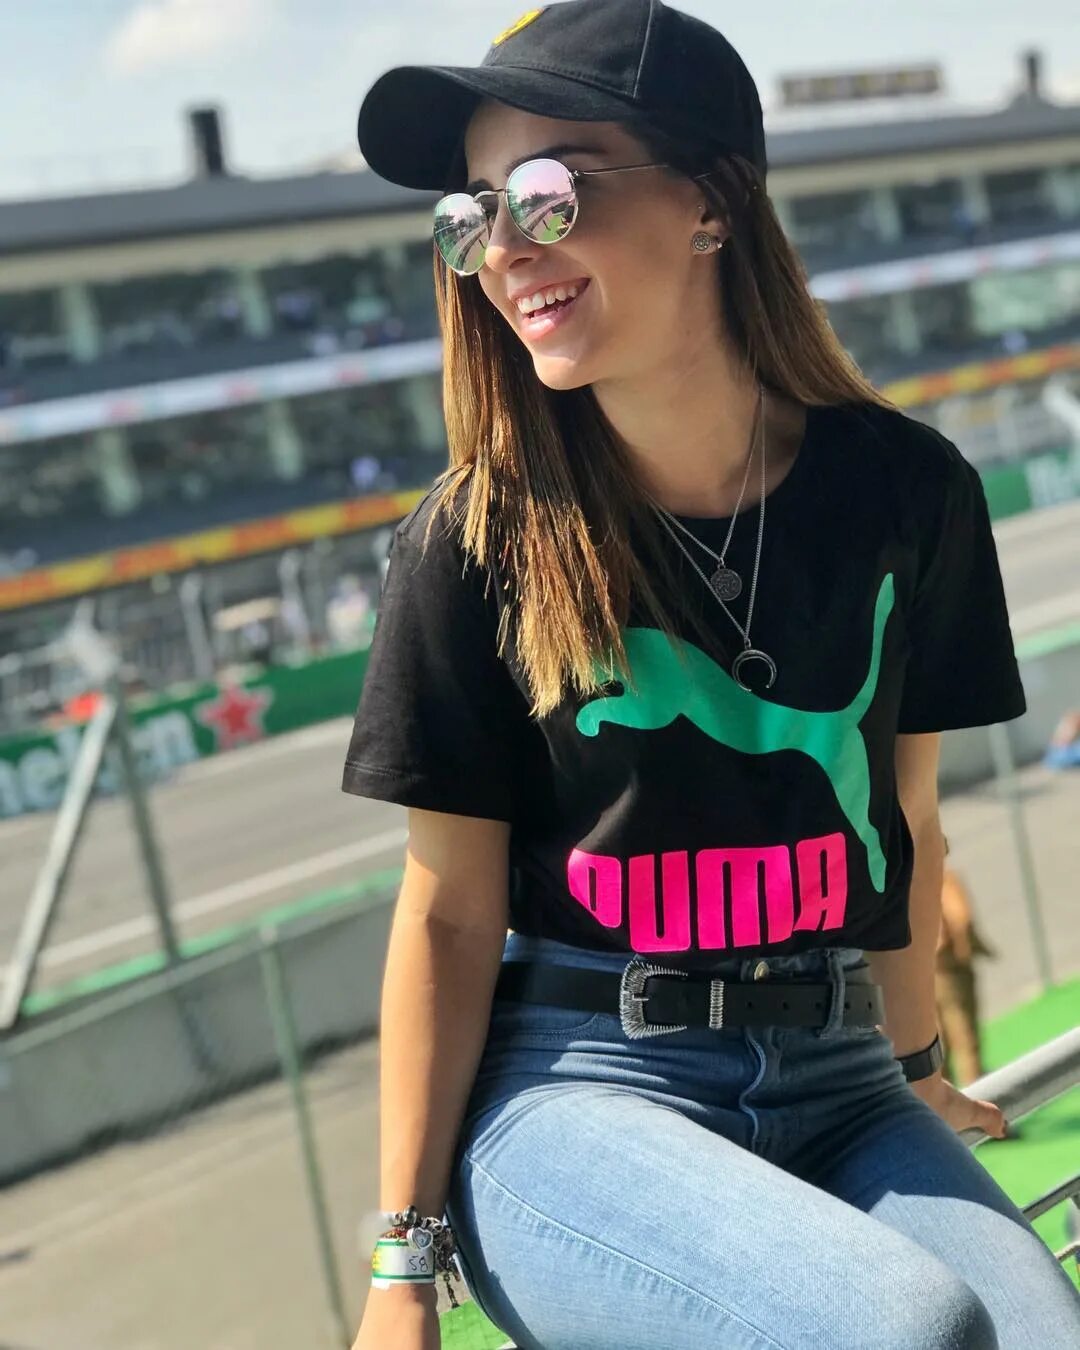 Instagram'da Fernanda Urdapilleta: "F1 🏎 c/ @pumamexico.